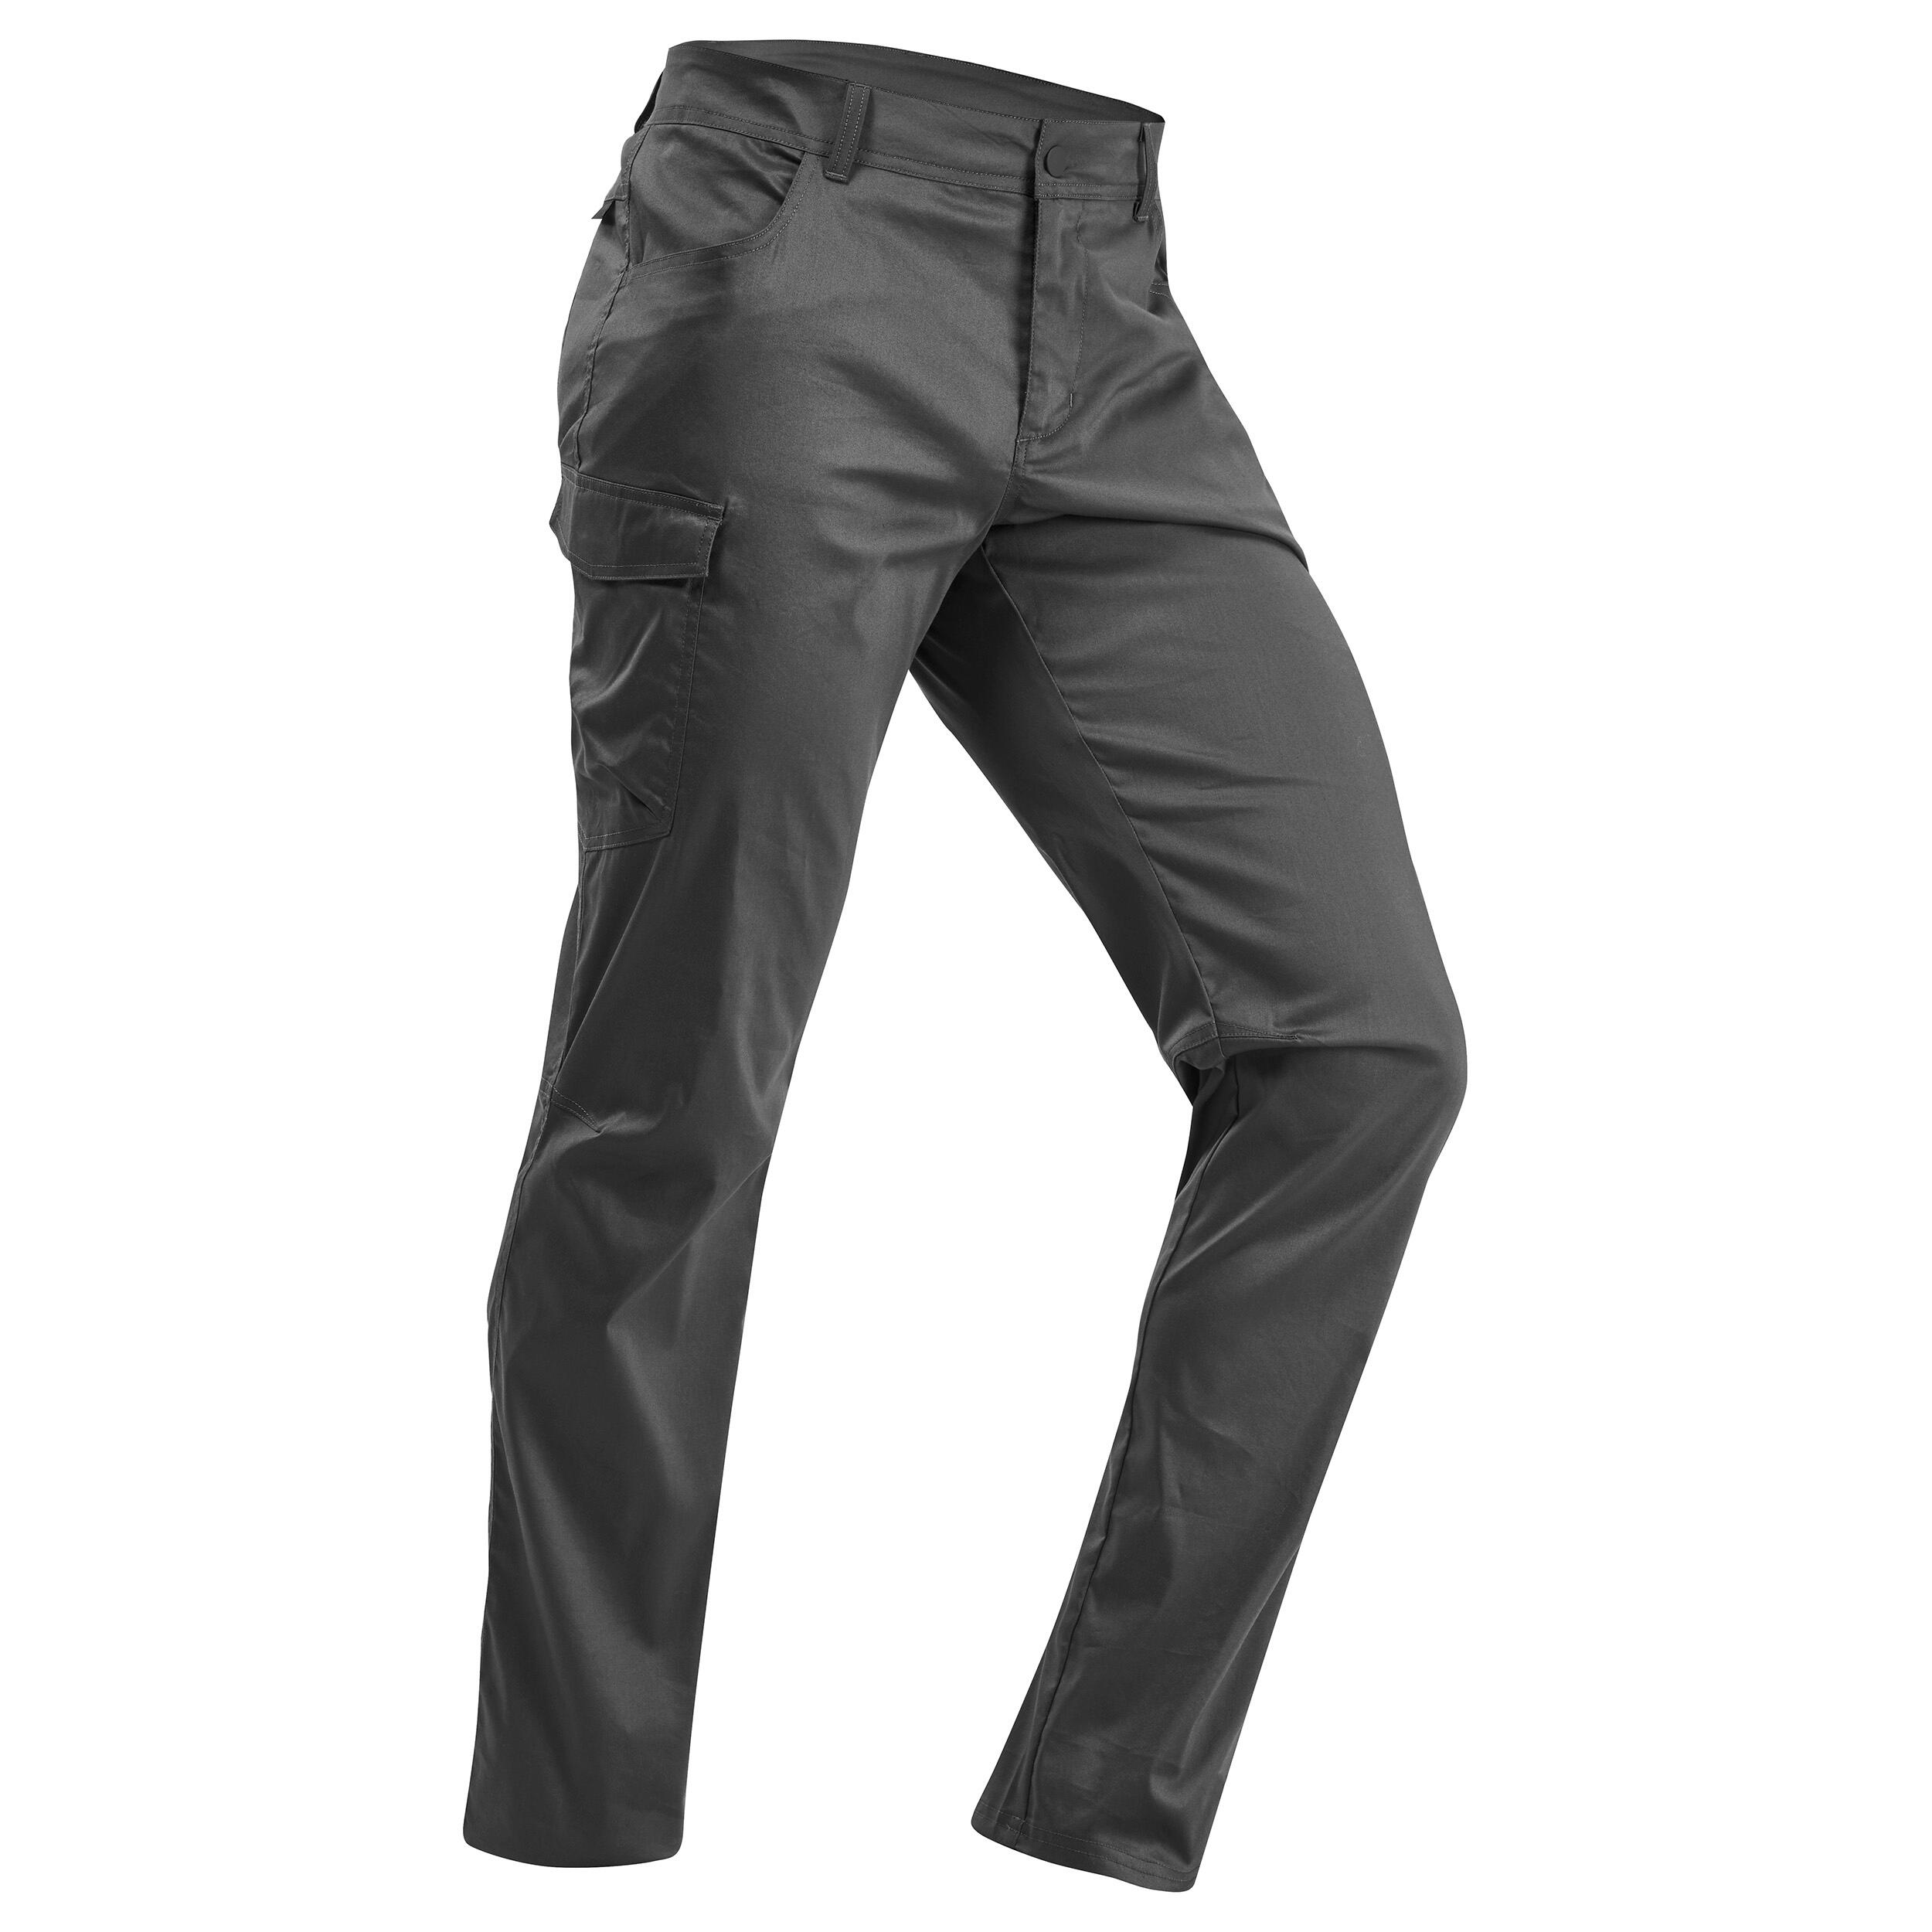 Men’s Hiking Pants - NH 100 Grey